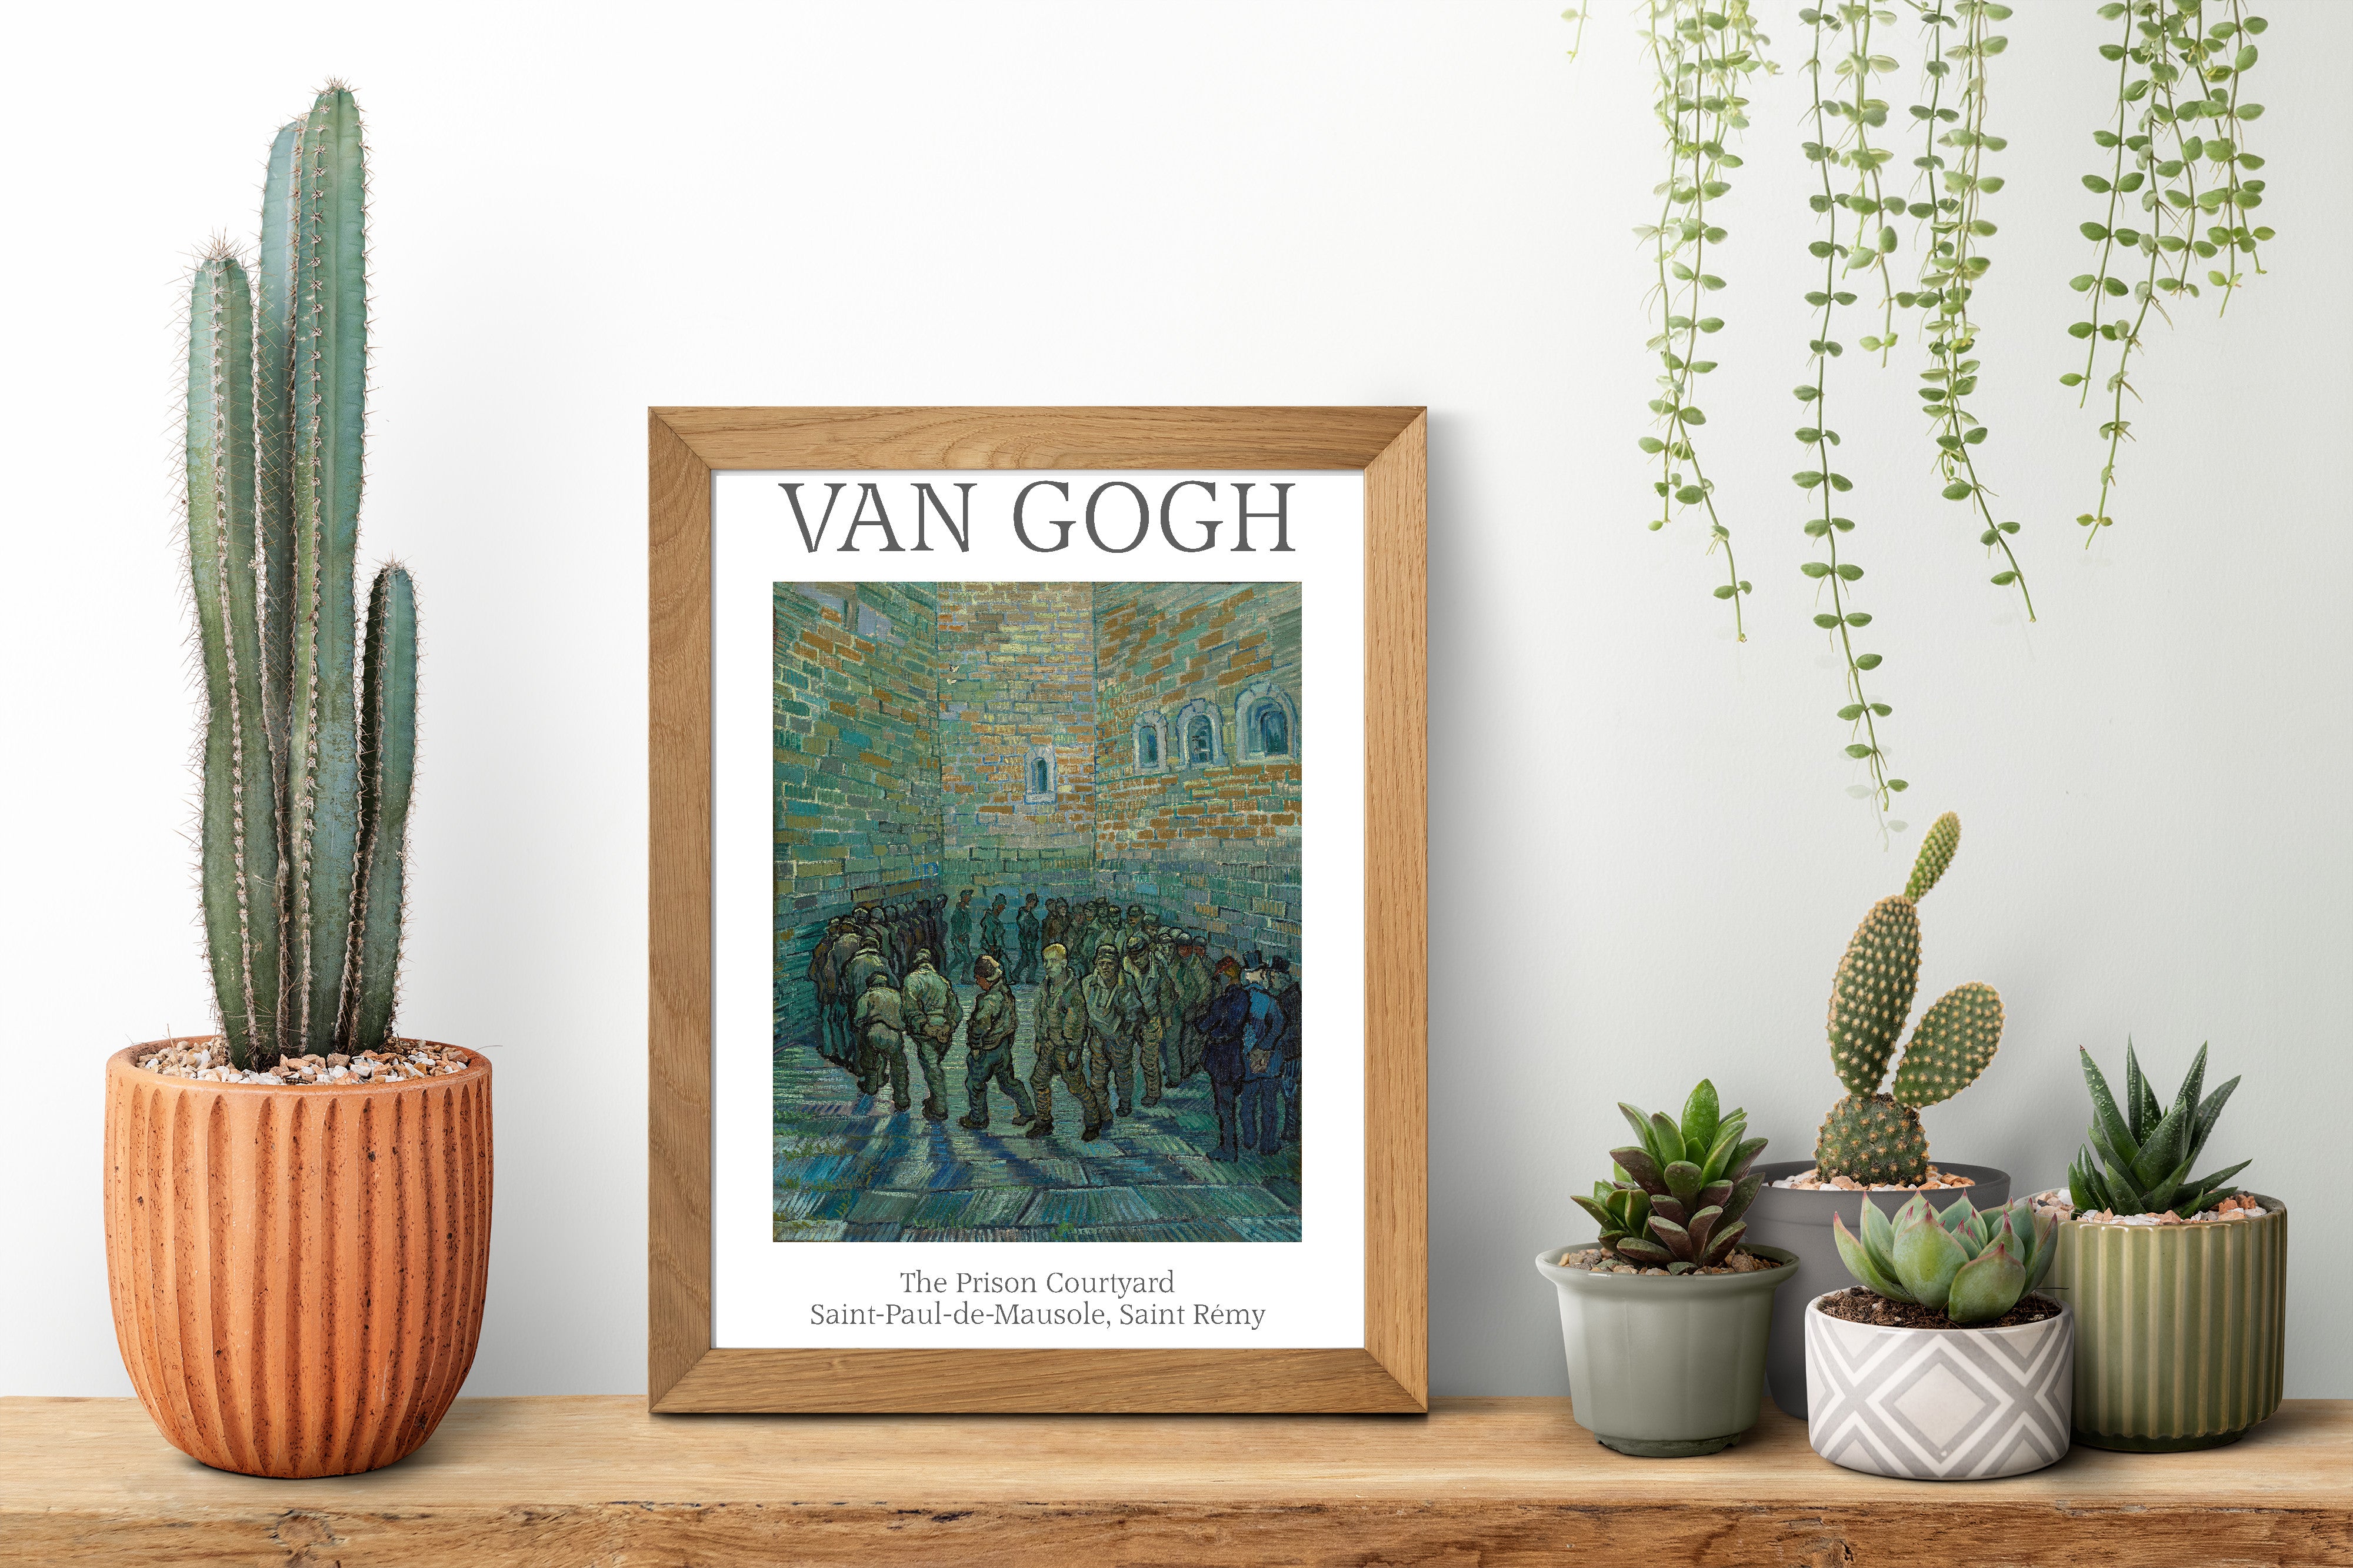 Vincent Van Gogh Exhibition Poster, The Prison Courtyard